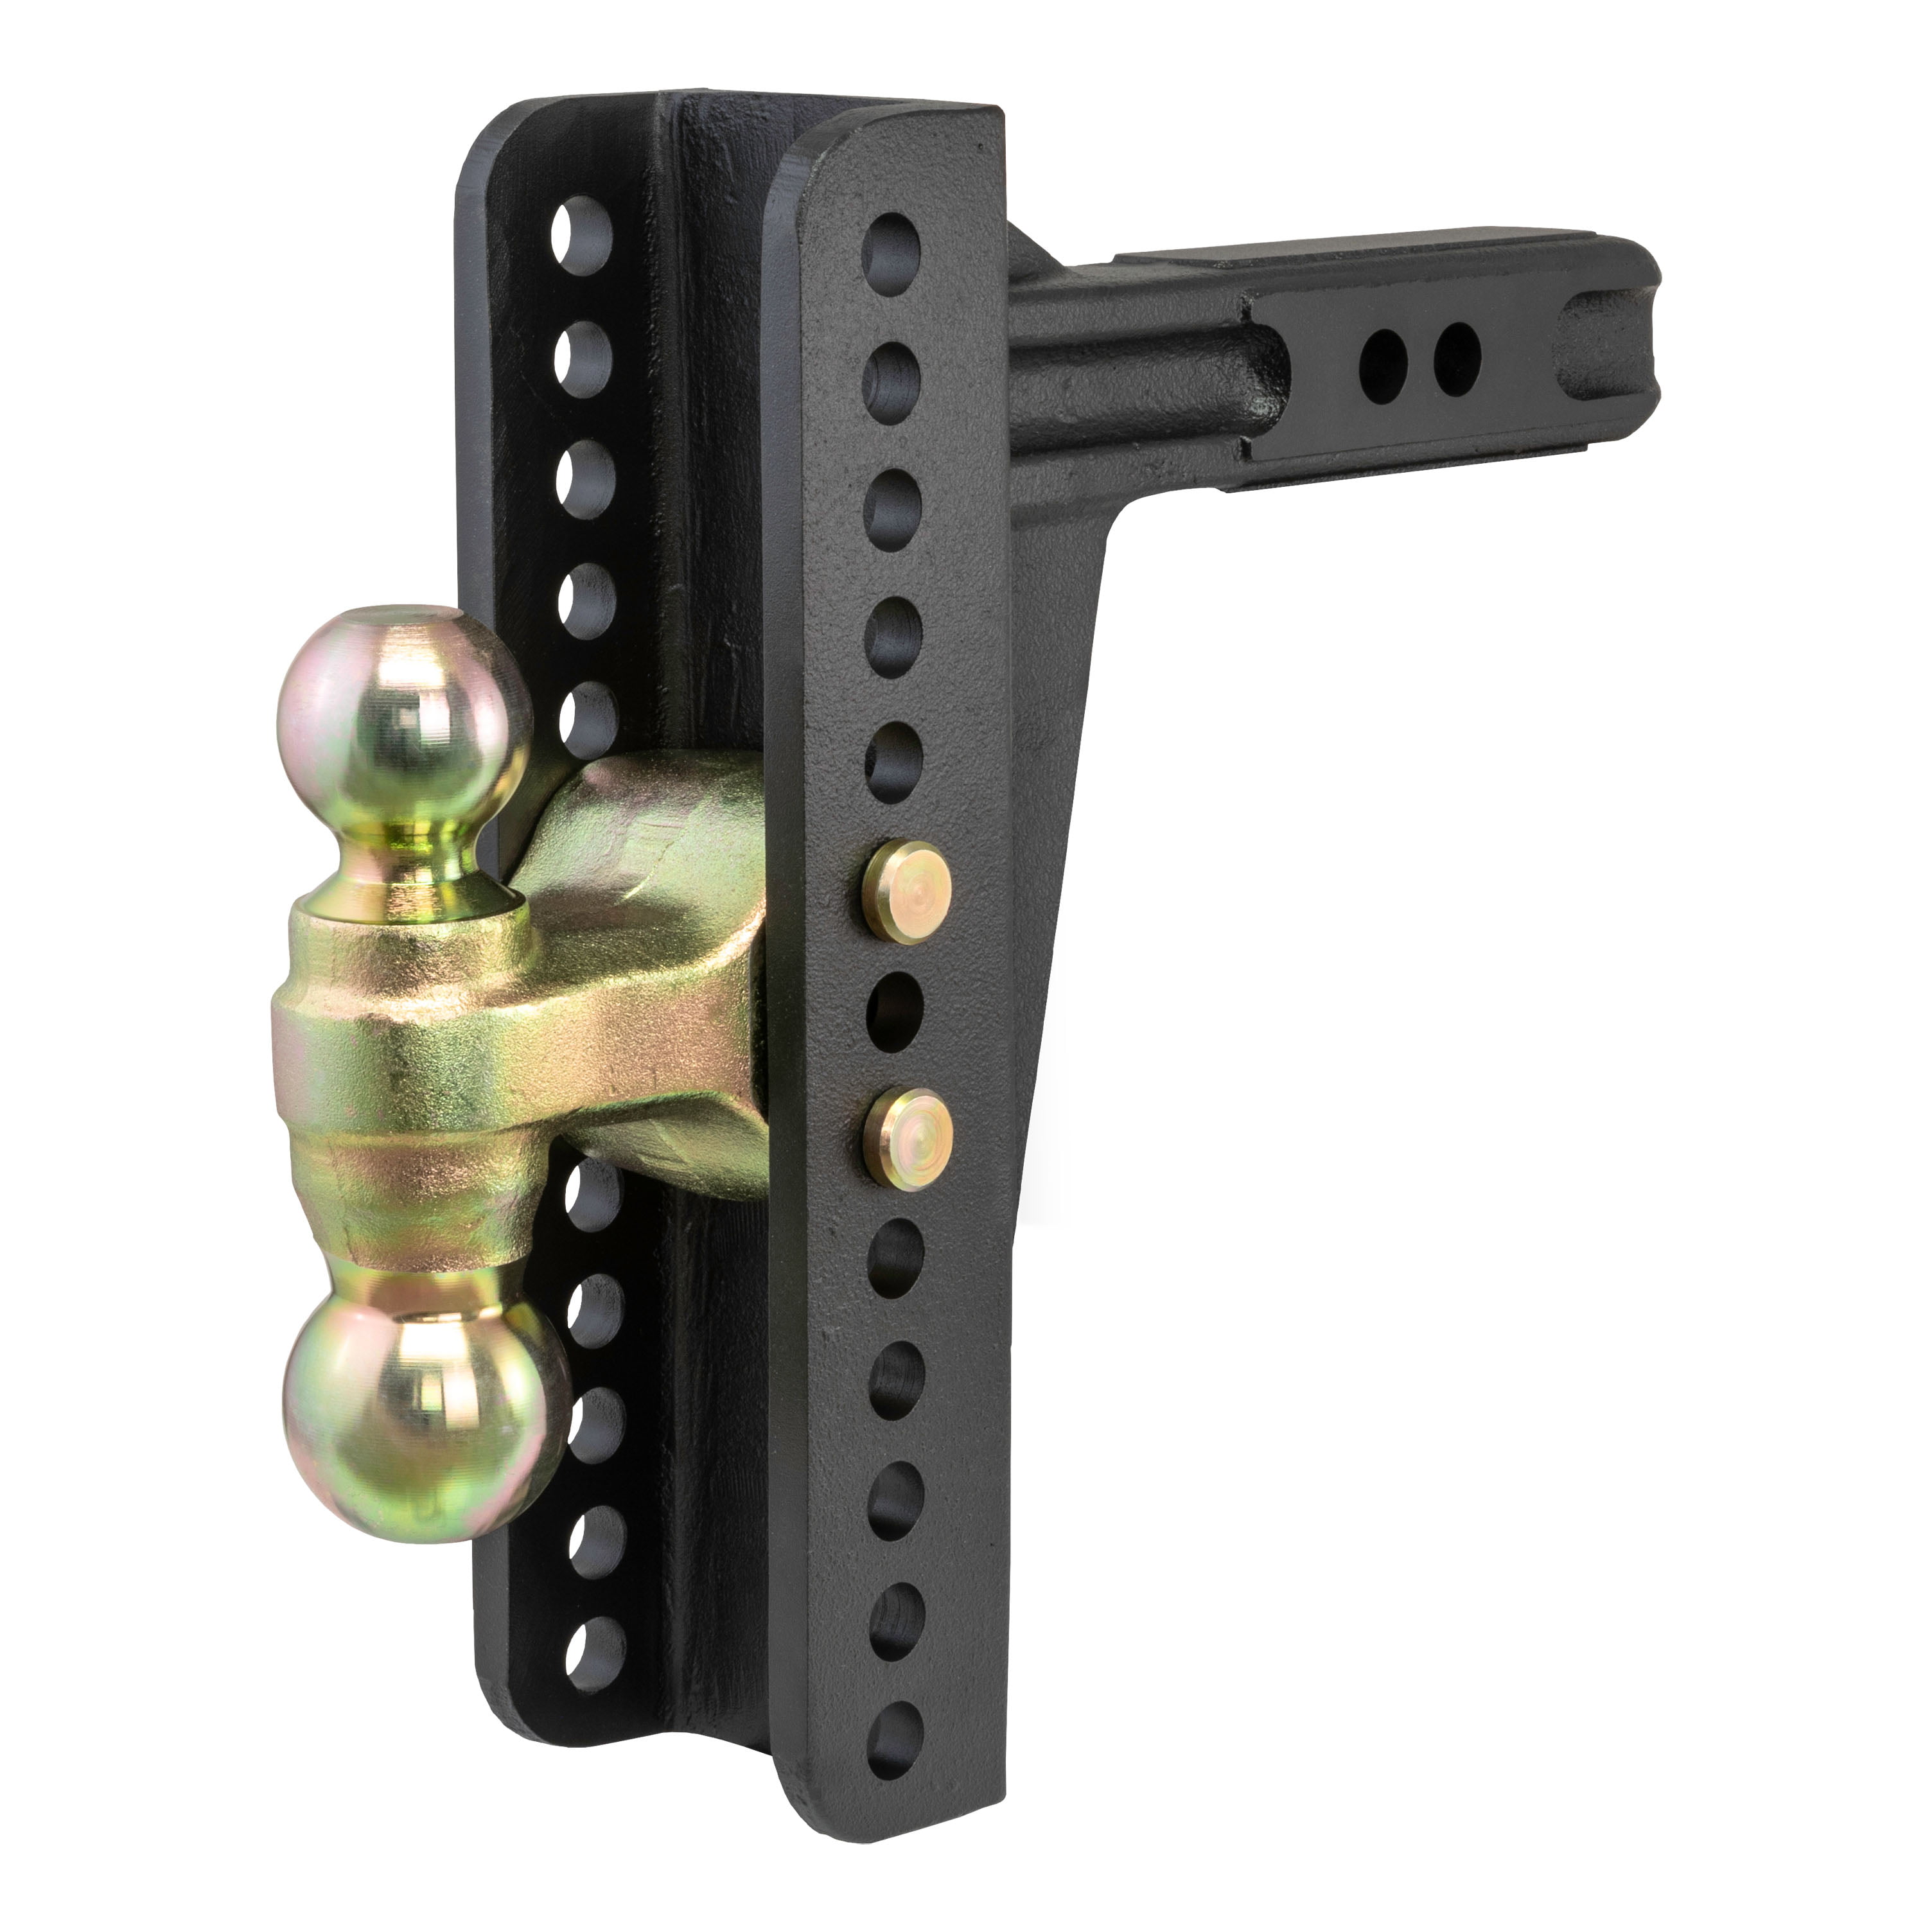 2&2-5/16 Keyed Alike Key Lock 2.5 Receiver-Adjustable Aluminum Trailer Hitch Ball Mount w/Built-in Scale Weigh Safe WS6-2.5-BA Lifetime Gauge Warranty 2 Stainless Steel Balls 6 Drop Hitch 